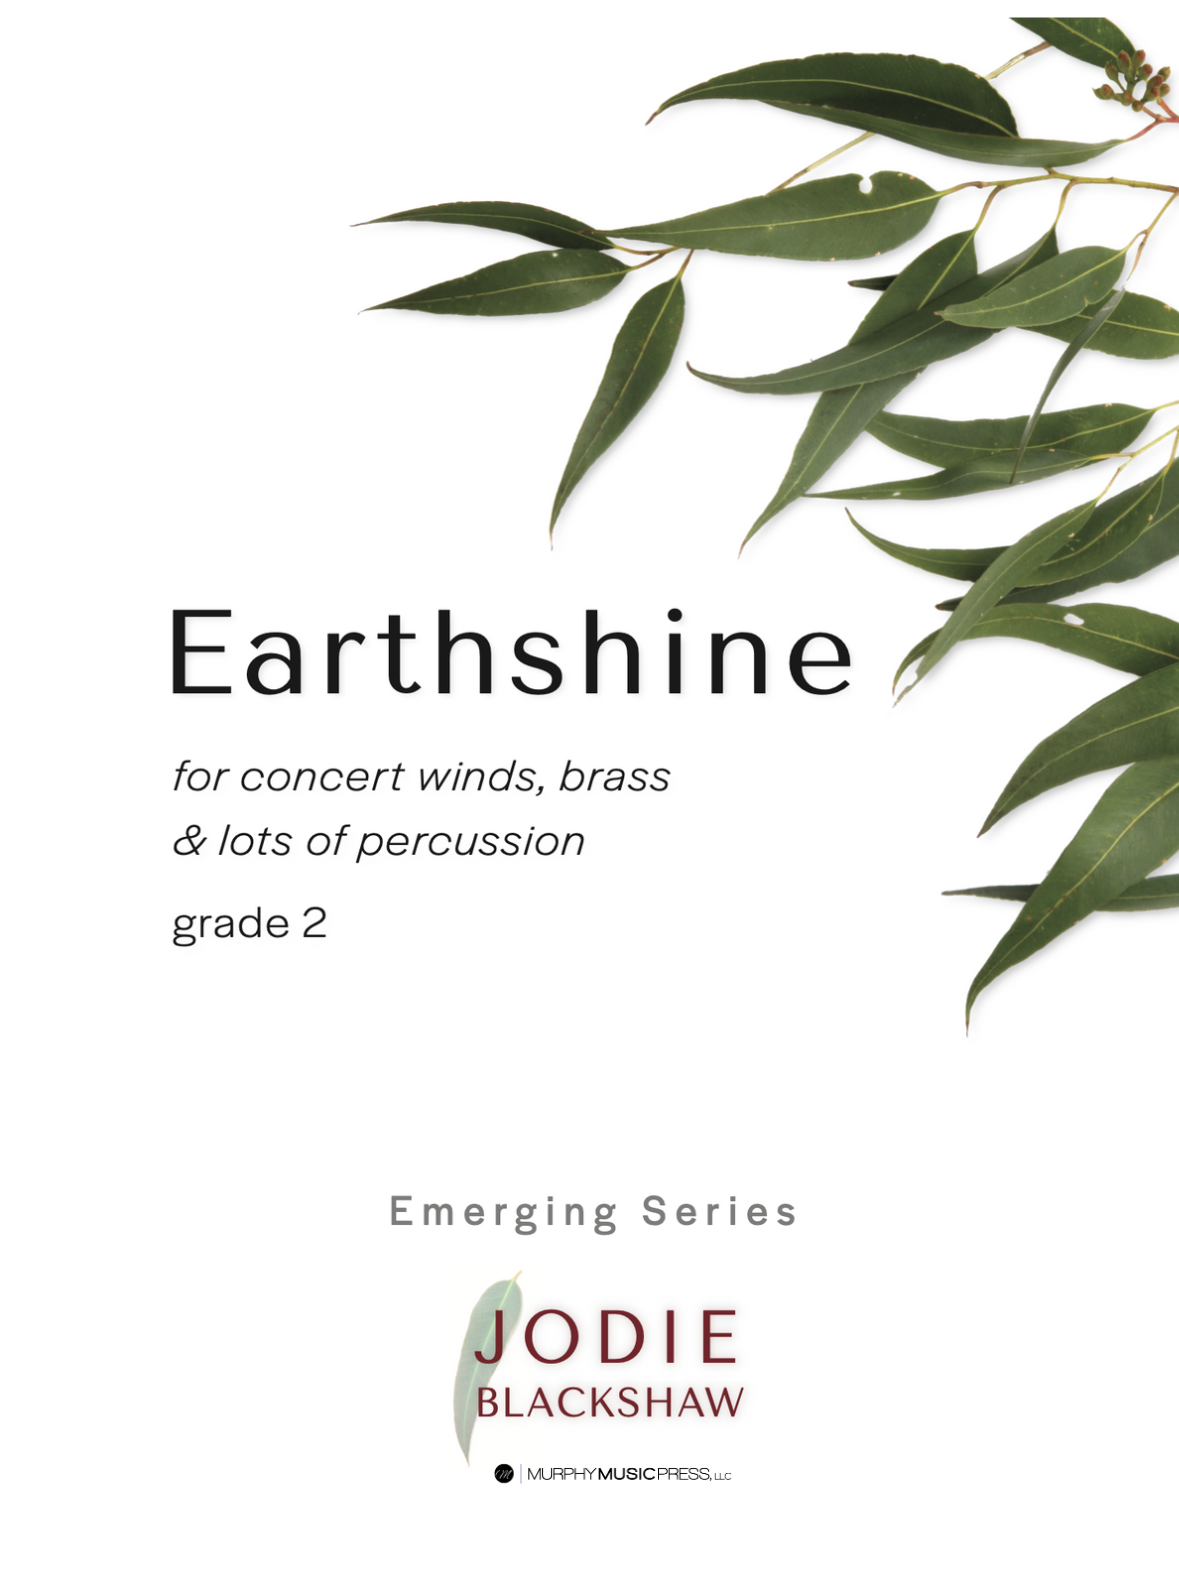 Earthshine by Jodie Blackshaw